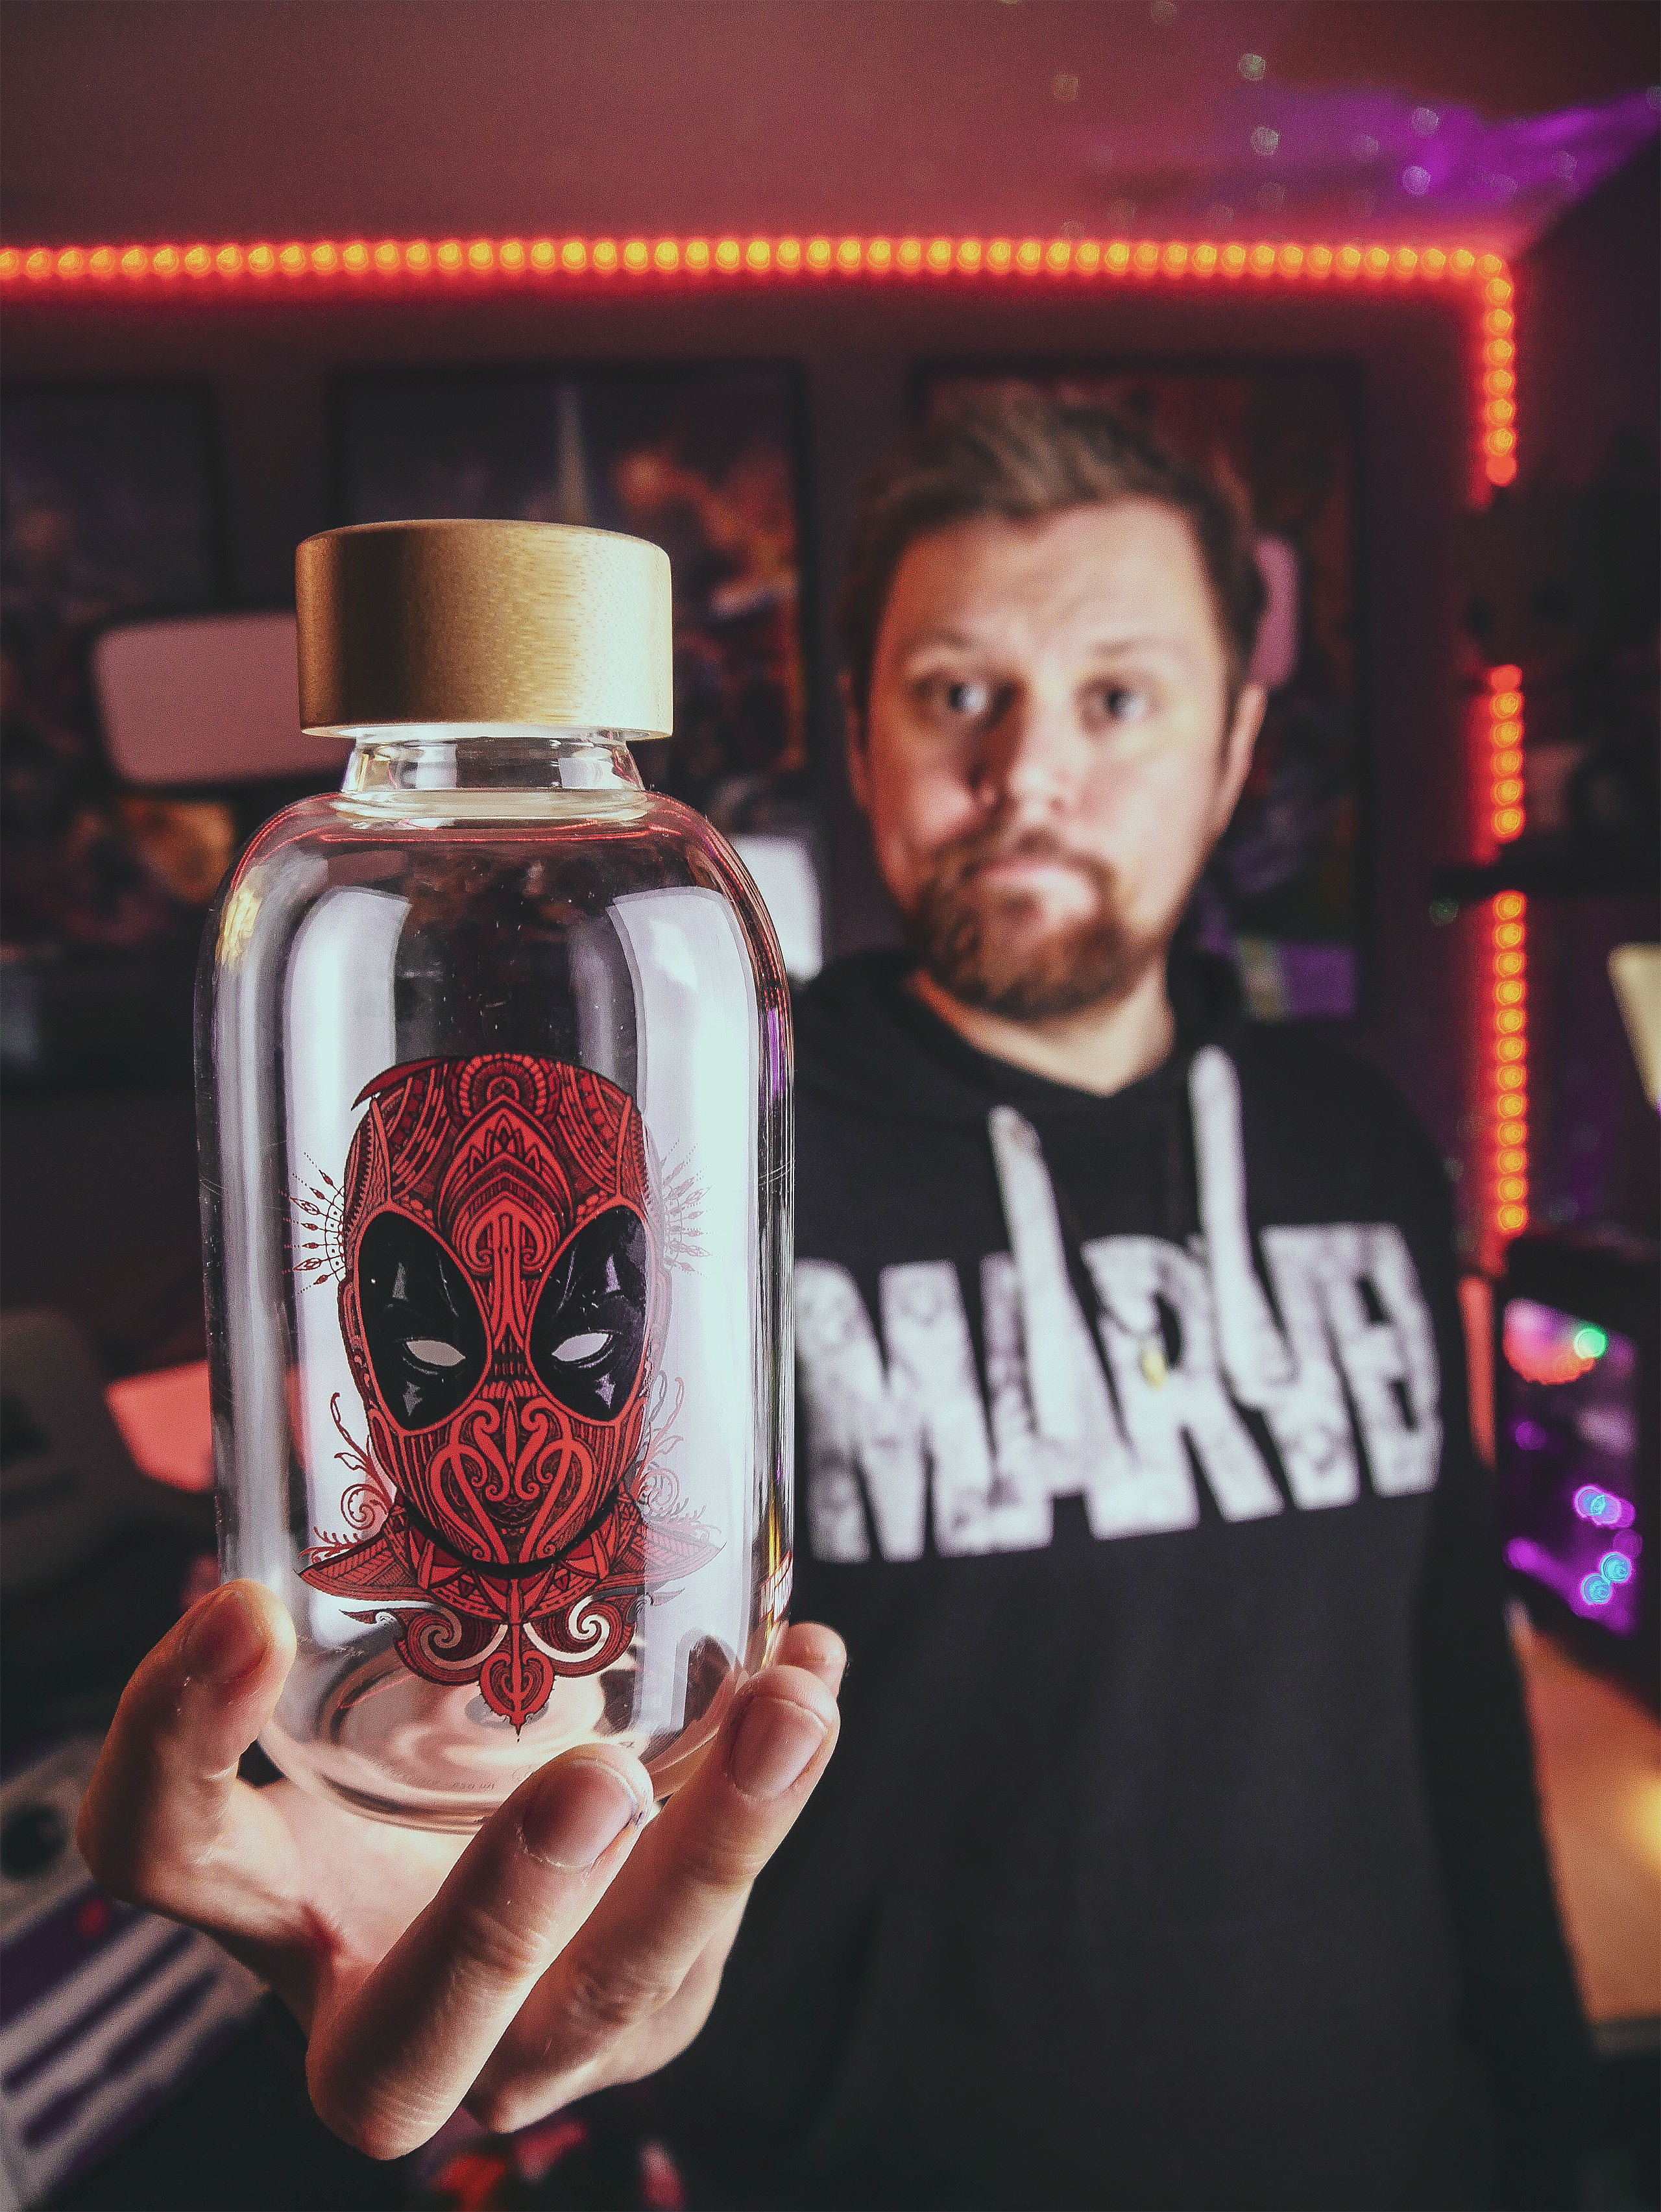 Deadpool - Portret Art Drinkfles